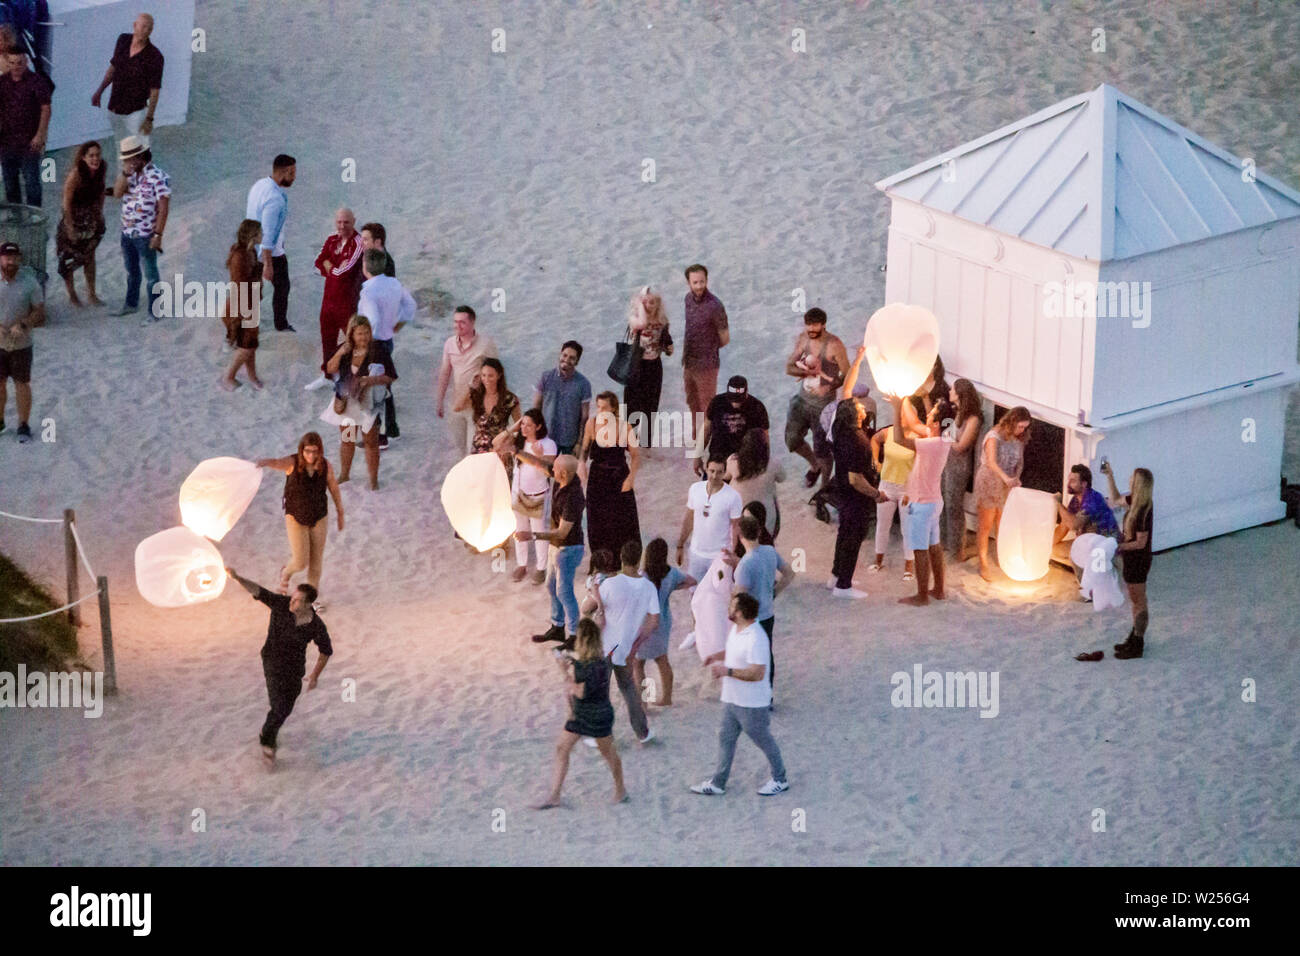 Miami Beach Florida,North Beach,sky lantern,Kongming Chinese lantern,paper hot air balloon,launching,Hispanic man men male,woman female women,boy boys Stock Photo